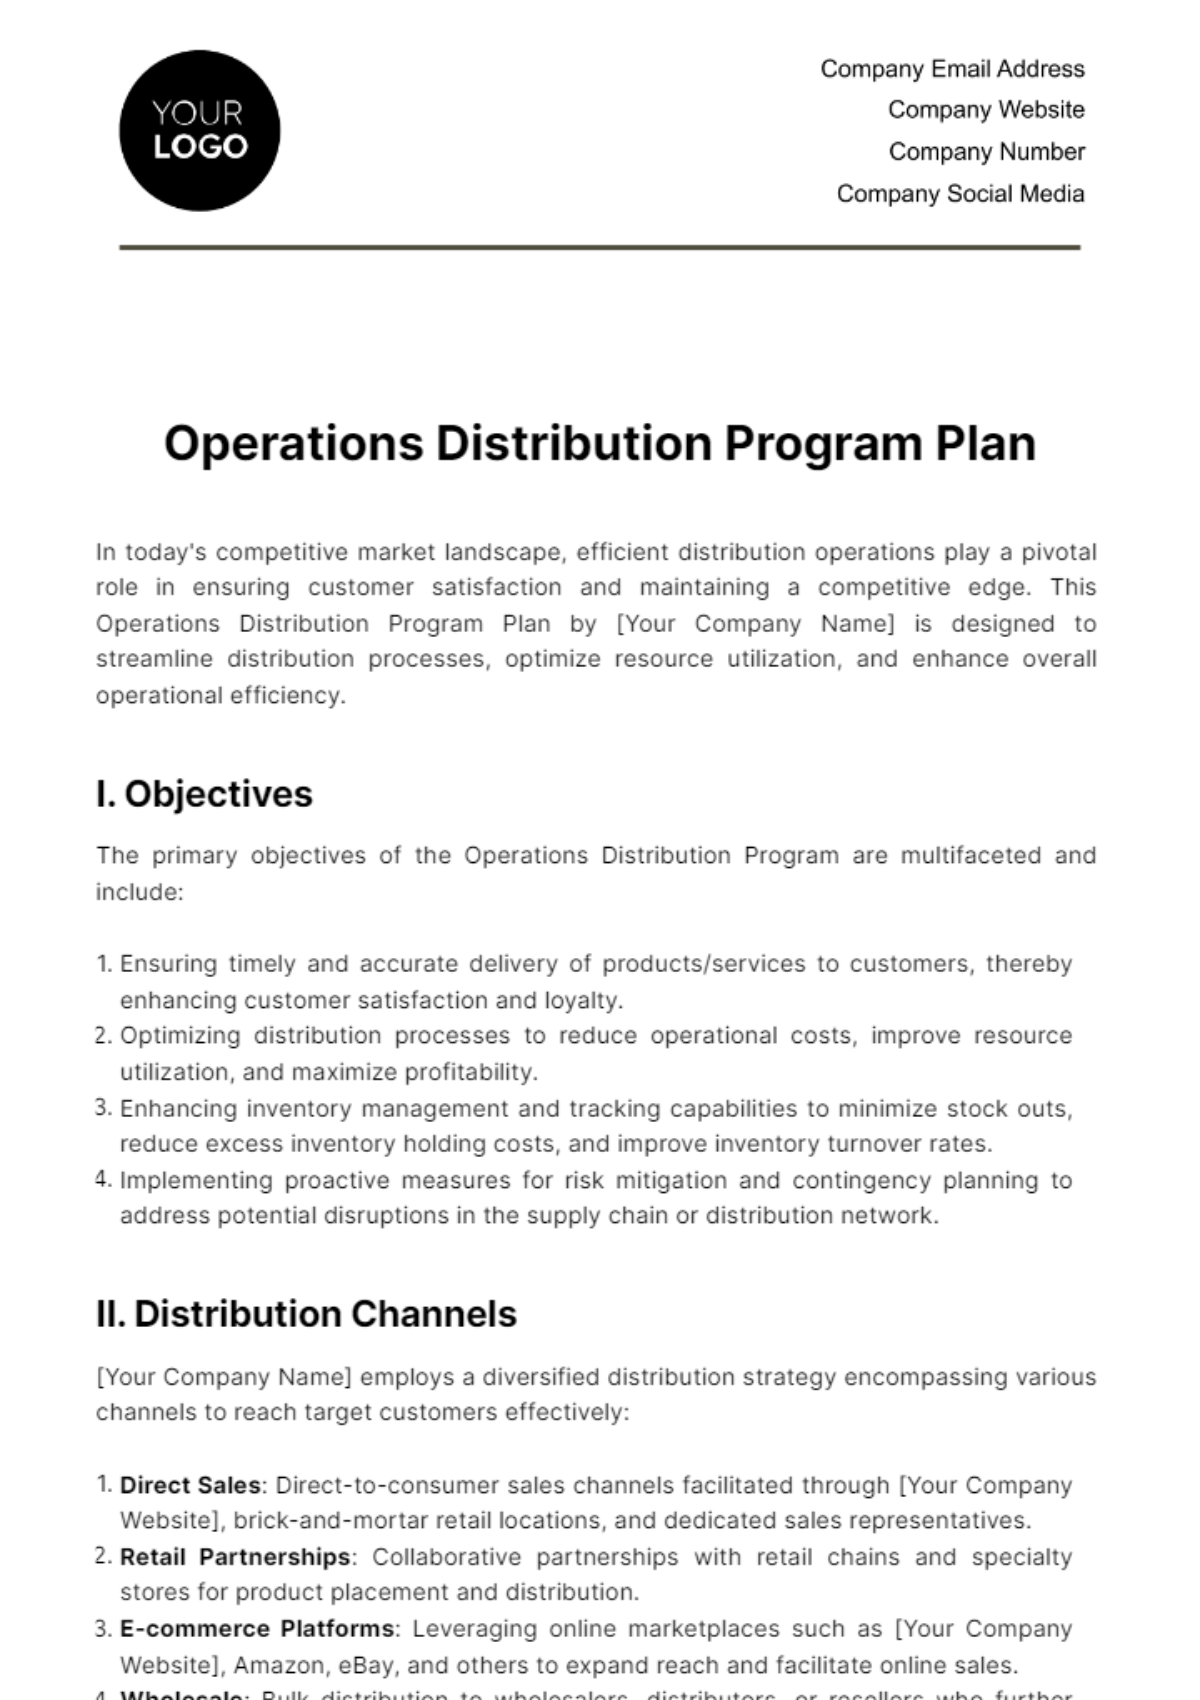 Operations Distribution Program Plan Template